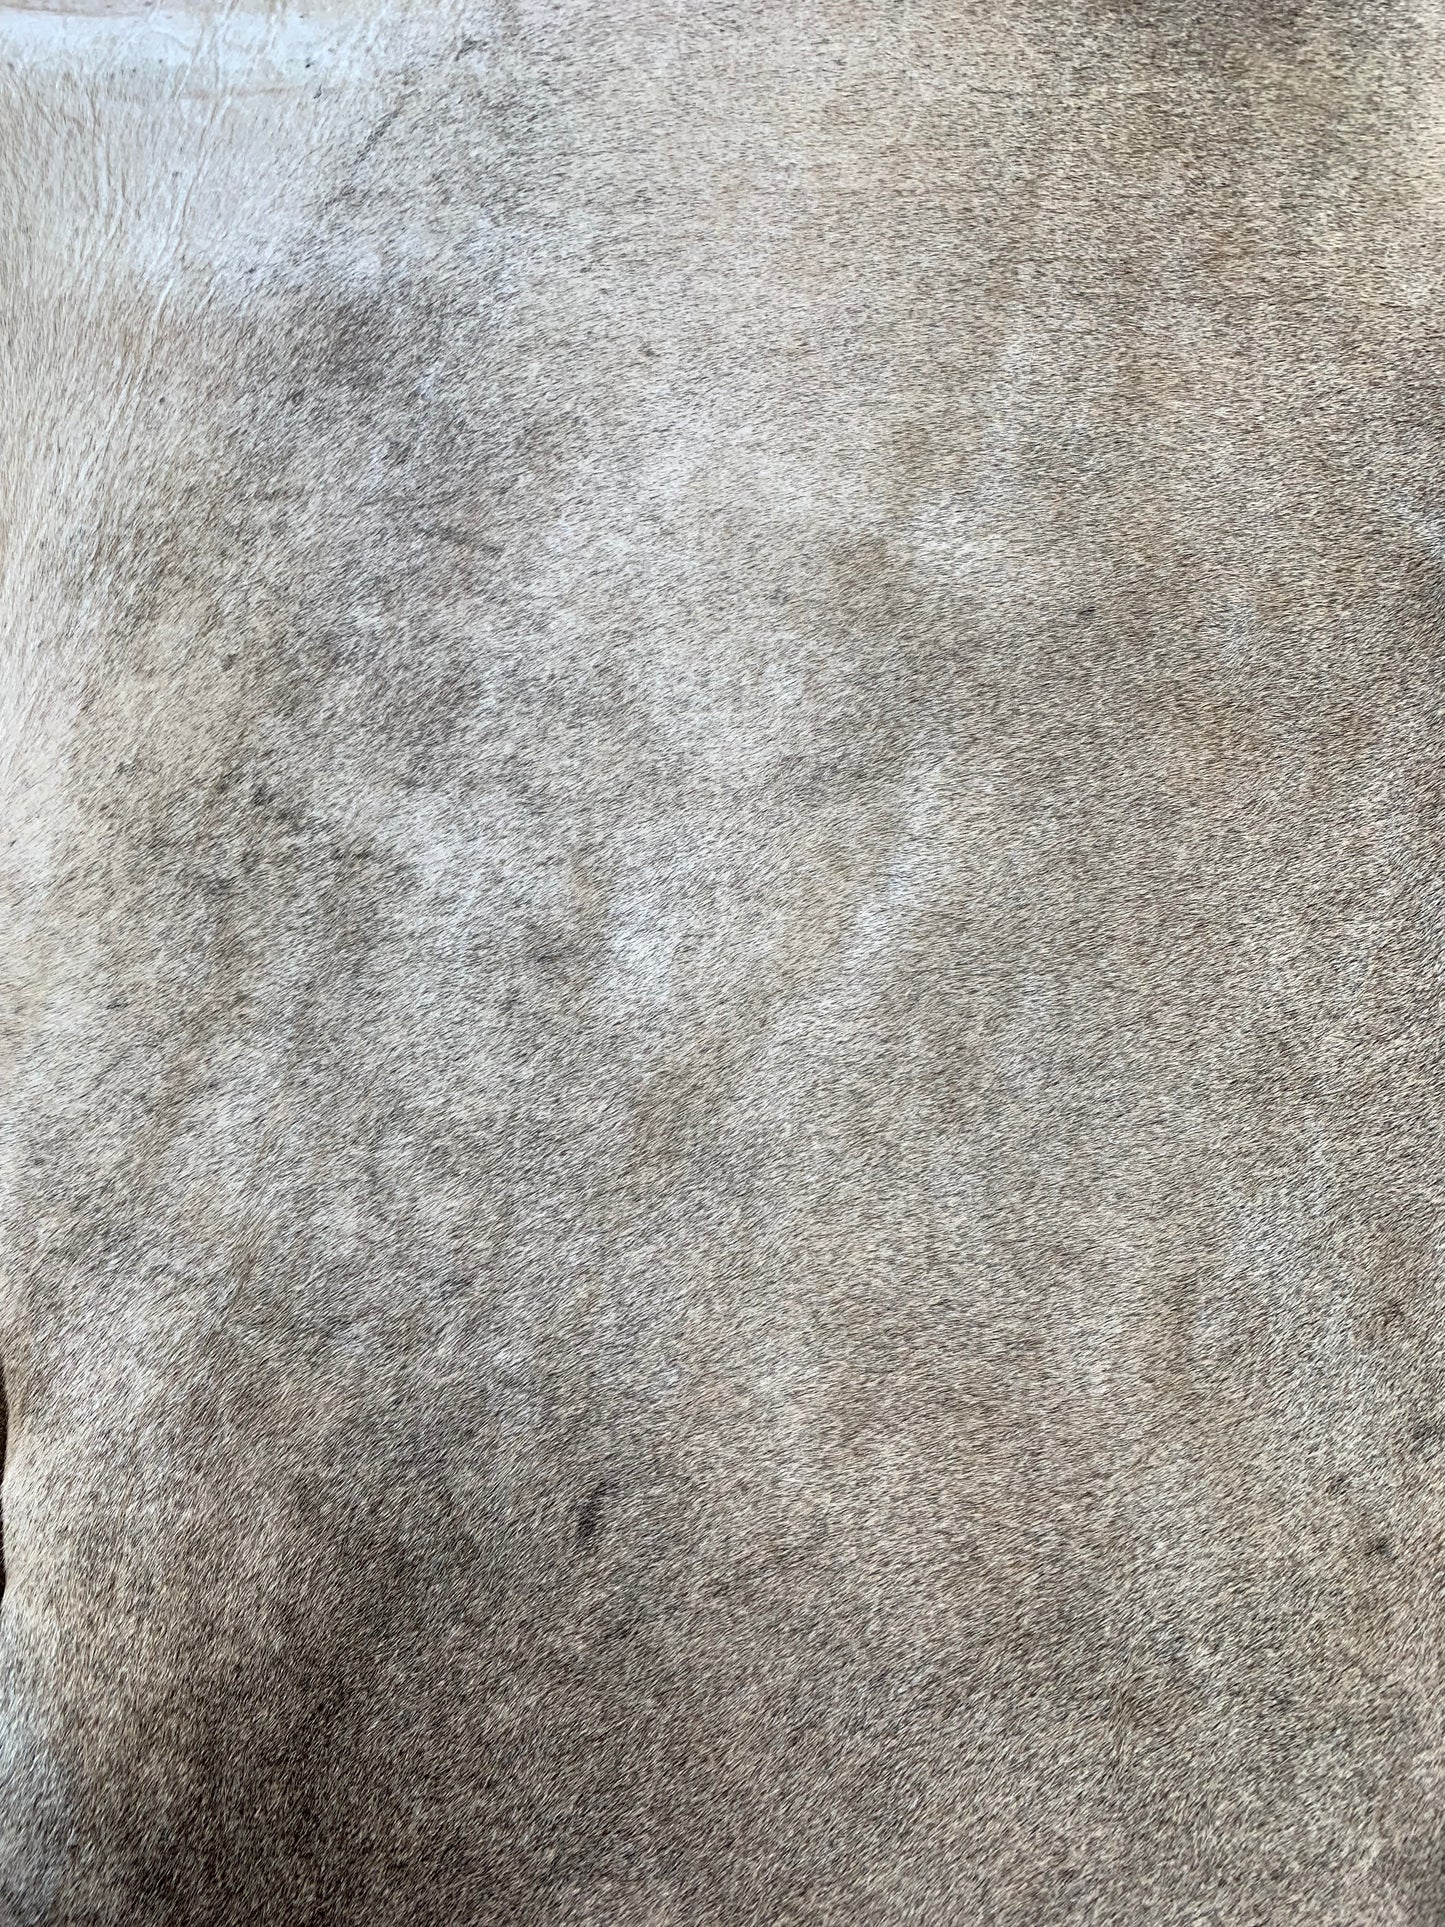 S-7: Cowhide rug - Medium black and gray